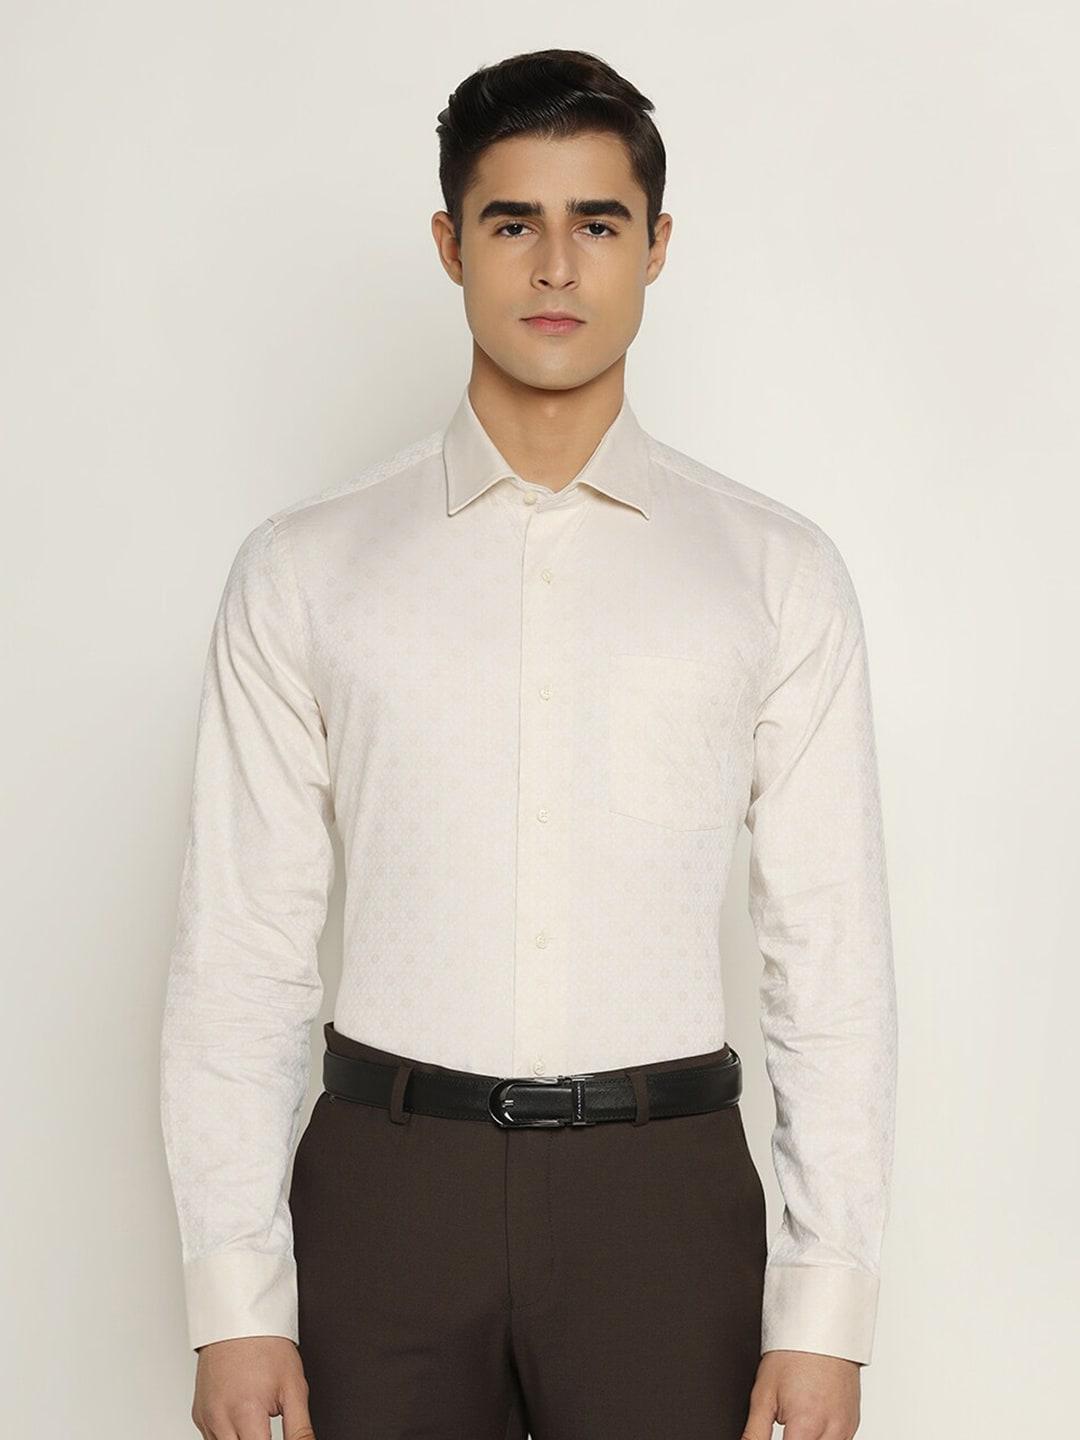 blackberrys-men-slim-fit-printed-pure-cotton-formal-shirt